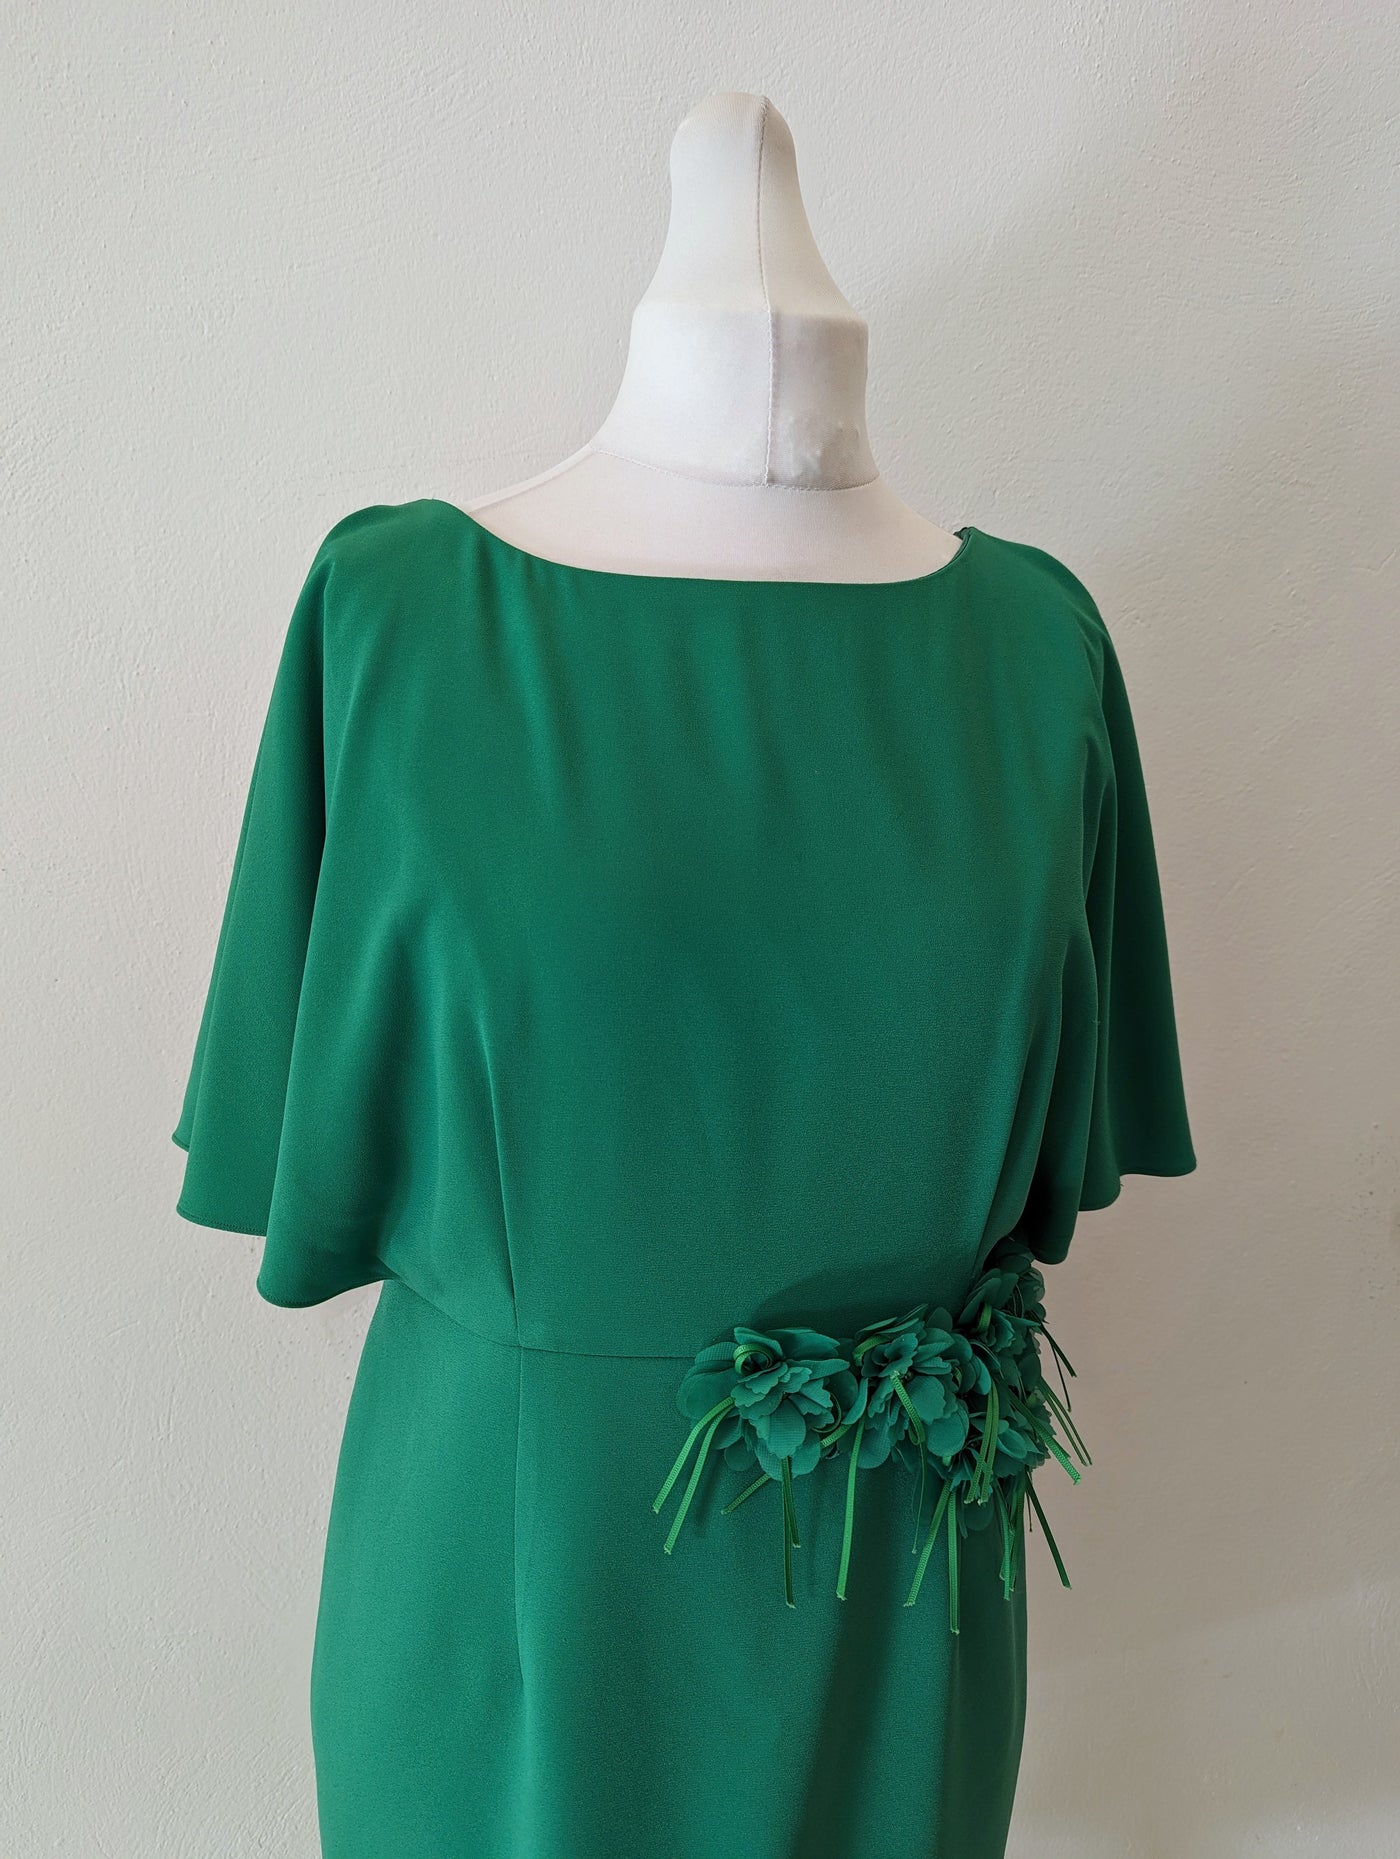 Cabotine Green Dress & Fascinator 44